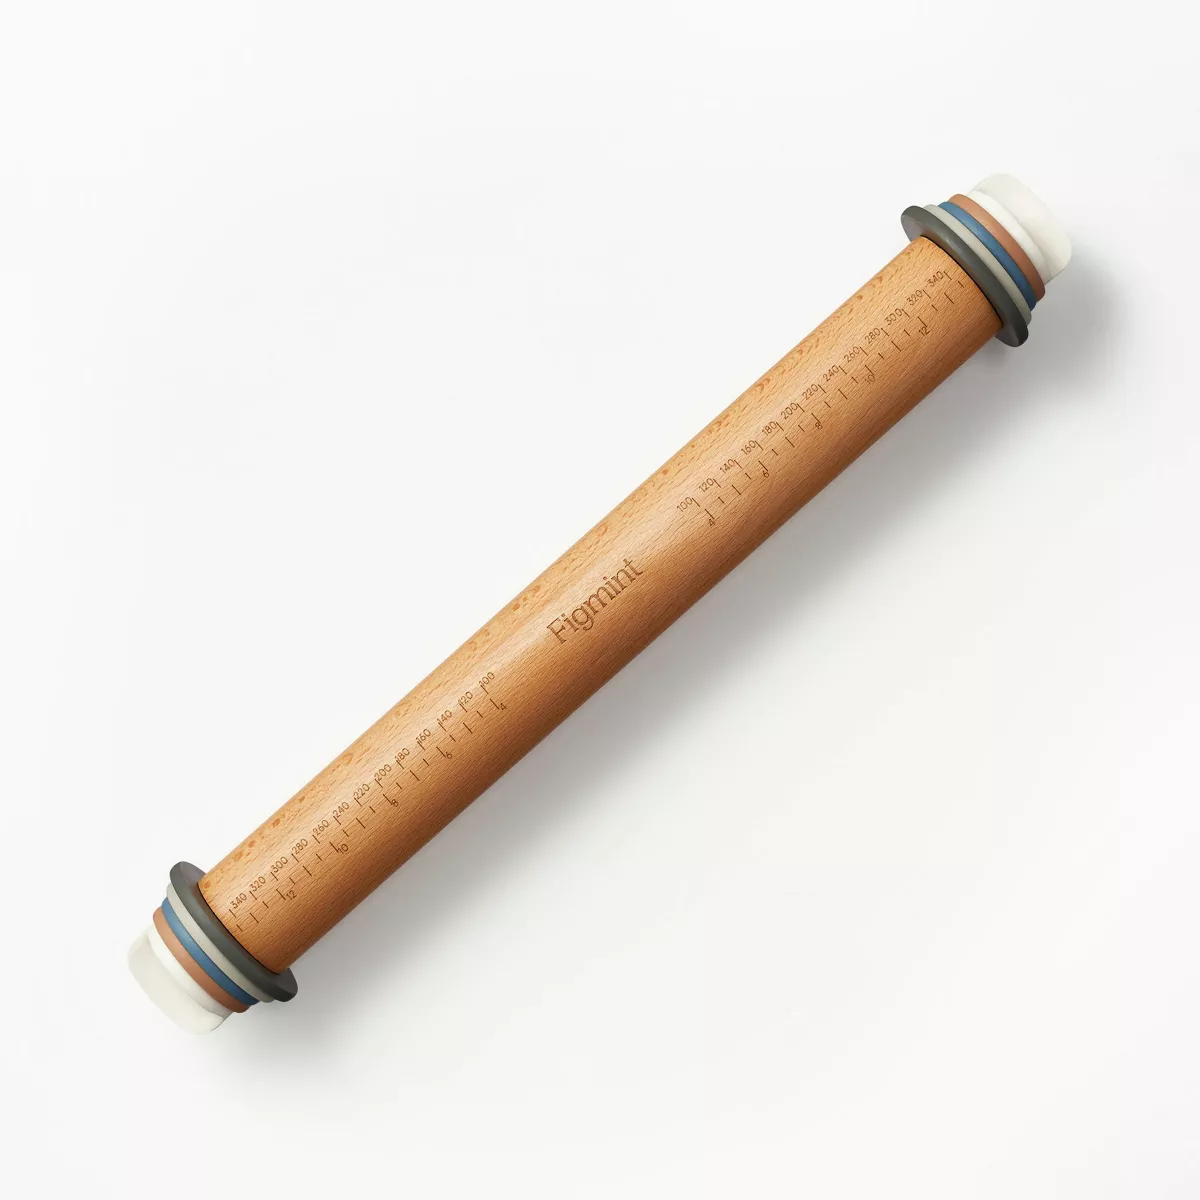 17.28" Adjustable Wood Rolling Pin Light Brown - Figmint™